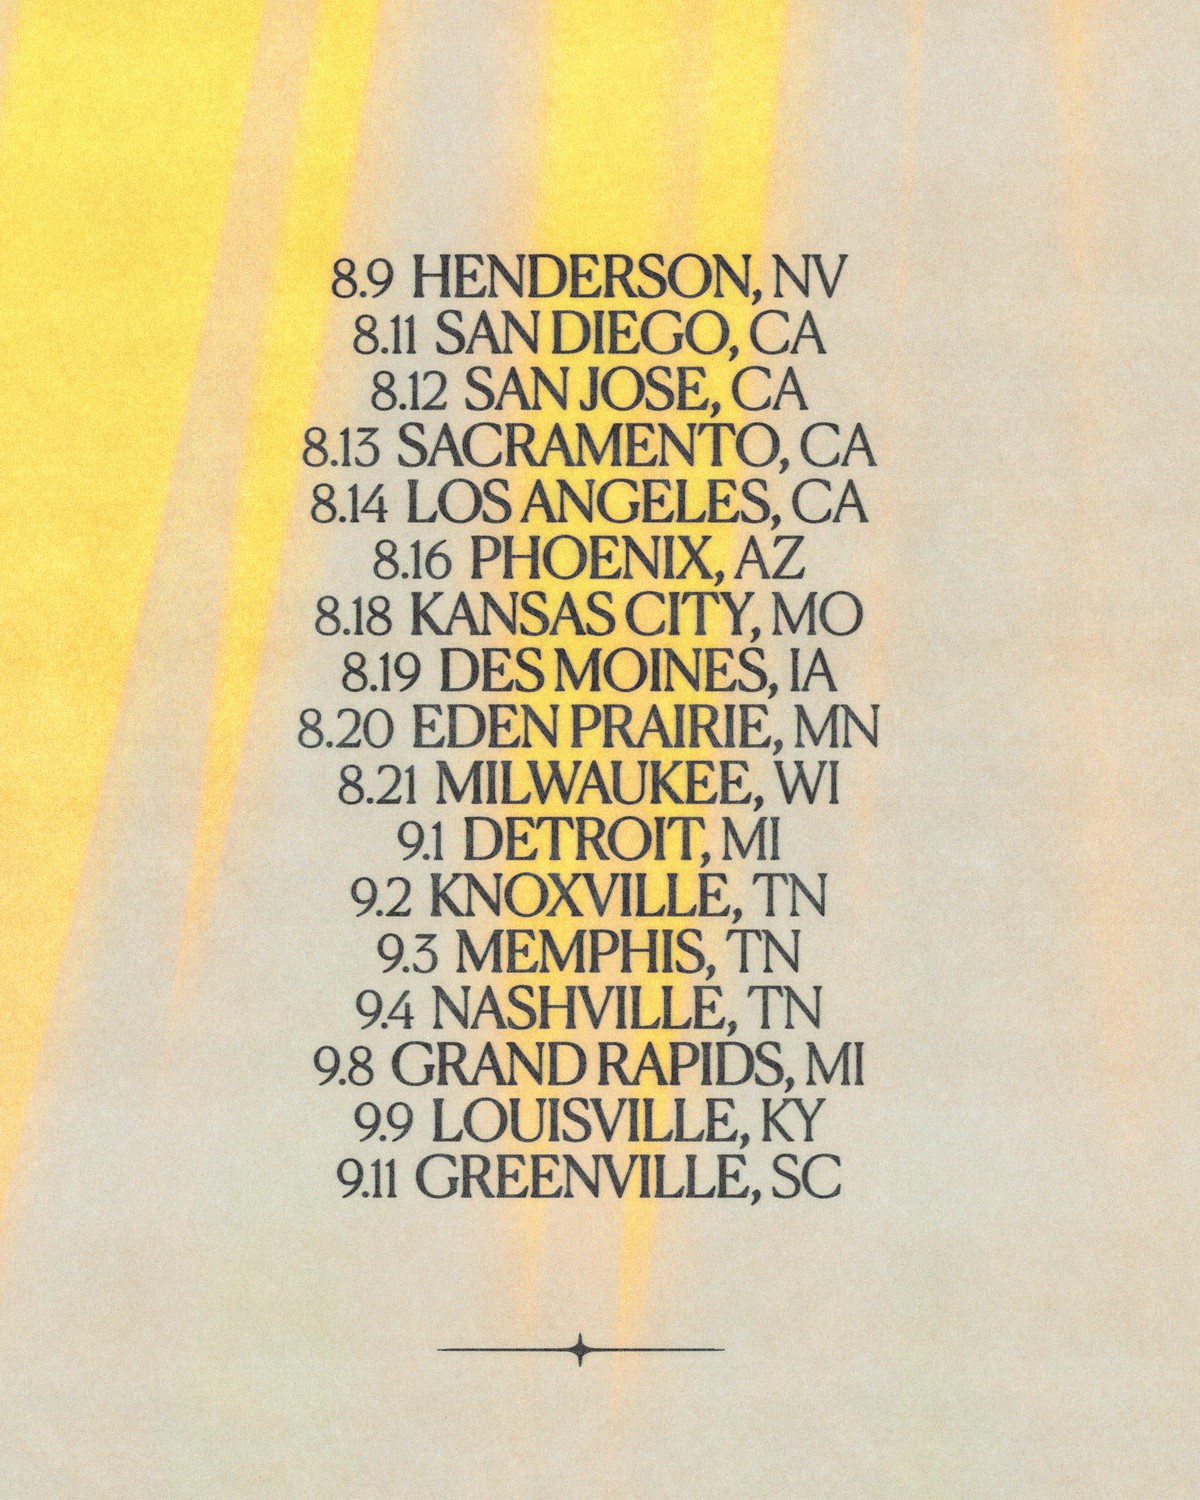 We Are UNASHAMED Tour Adds West Coast Dates